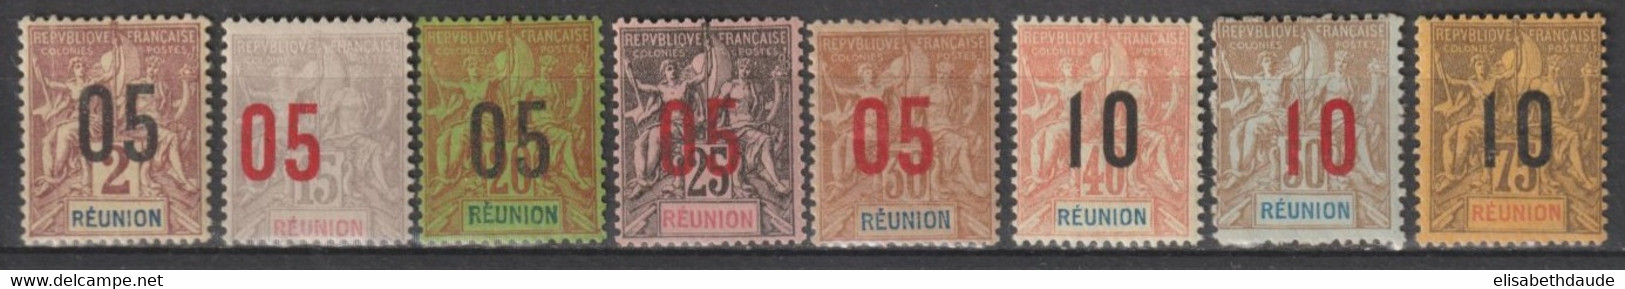 REUNION - 1912 - SERIE COMPLETE - YVERT N° 72/79 * MH (BELLE VARIETE DENTELURE DU 78 !) - COTE = 30+ EUR. - - Ungebraucht